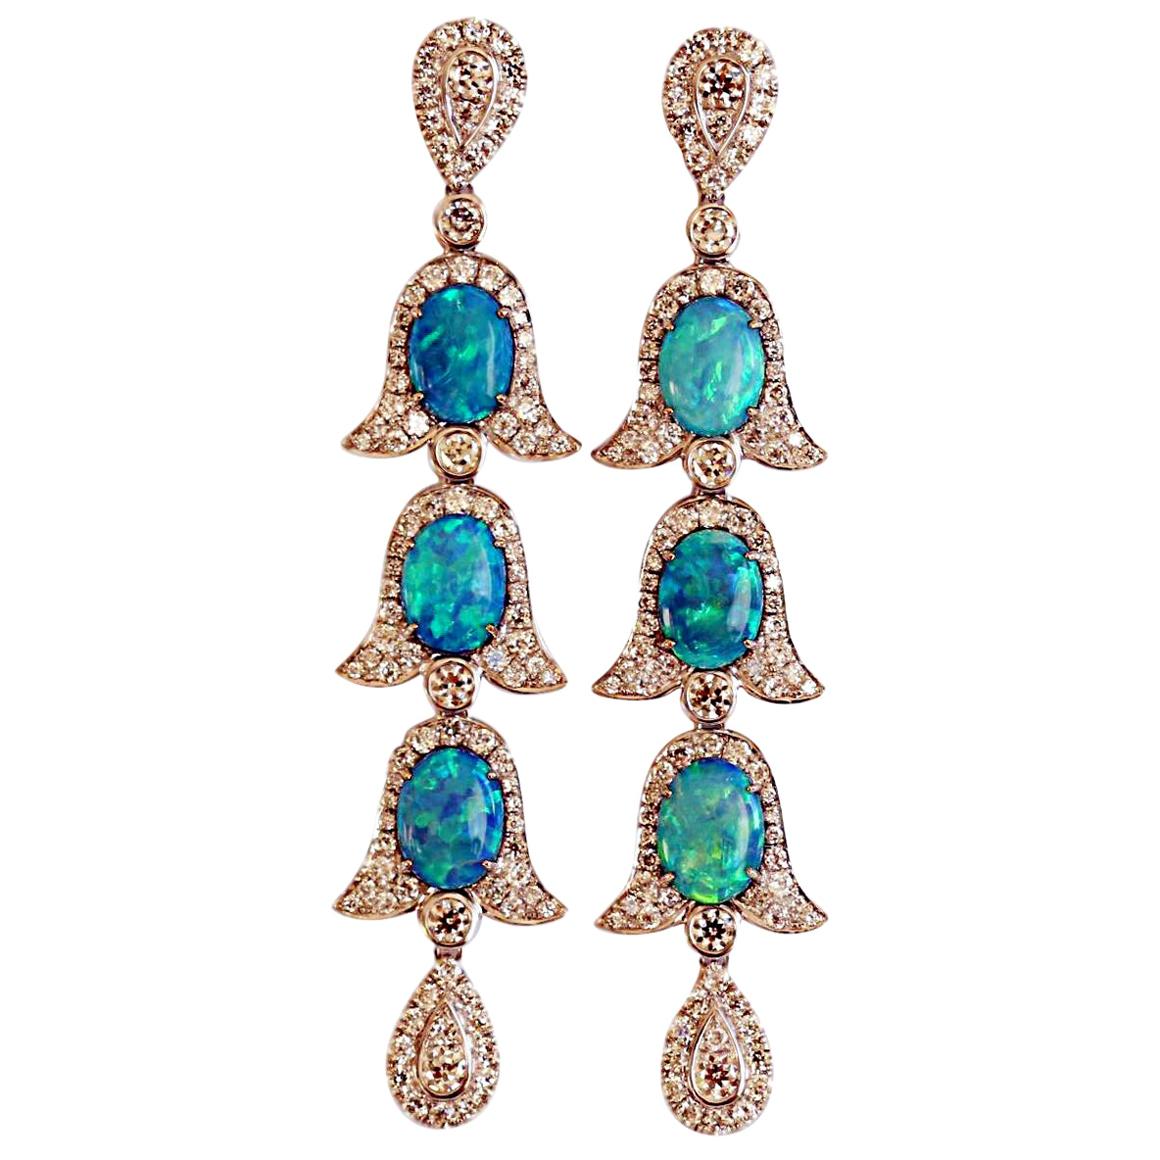 Edwardian Style of Opal and Diamond Earrings